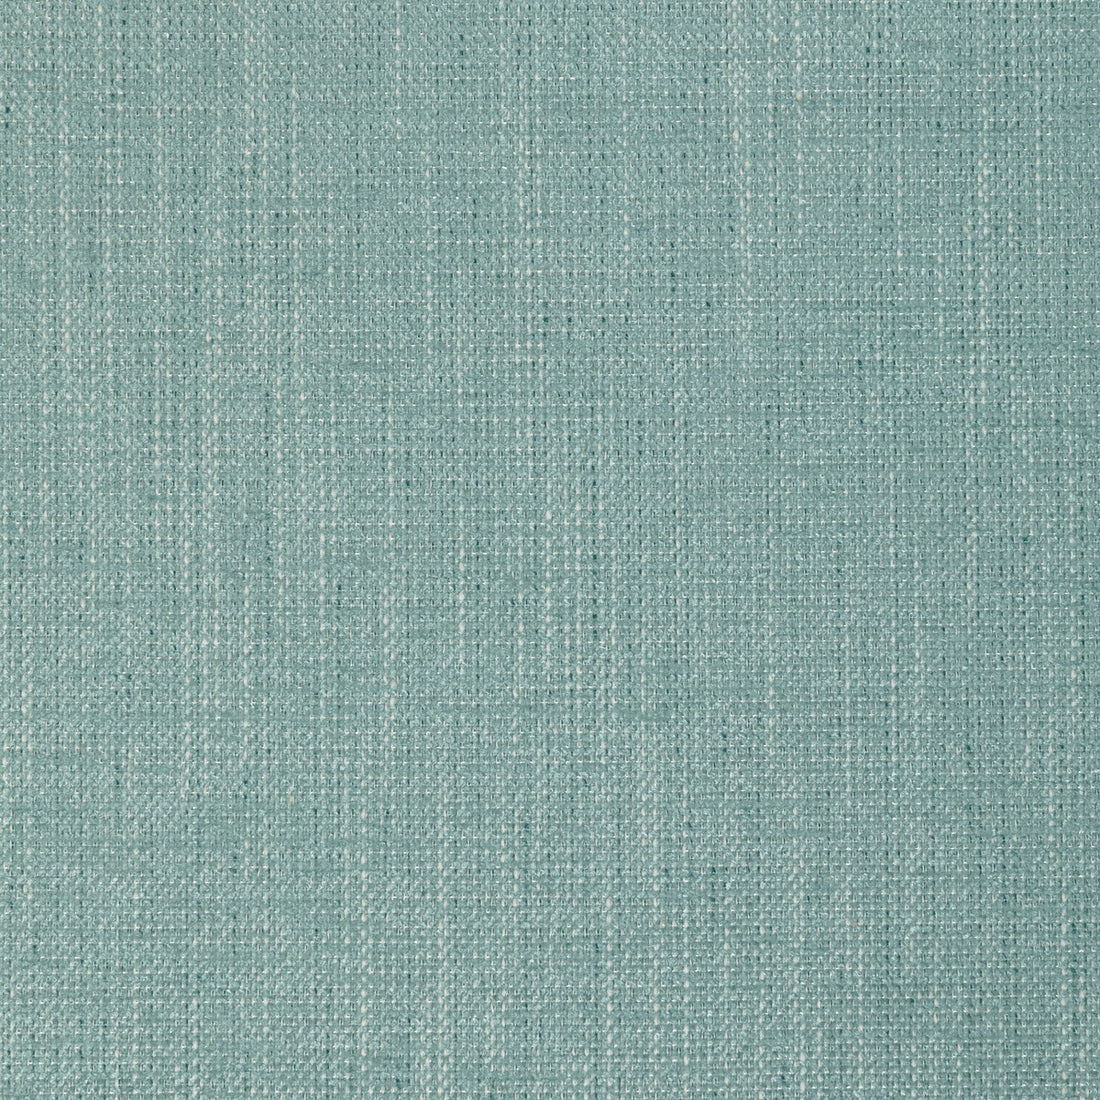 Poet Plain fabric in aqua color - pattern 36649.15.0 - by Kravet Basics